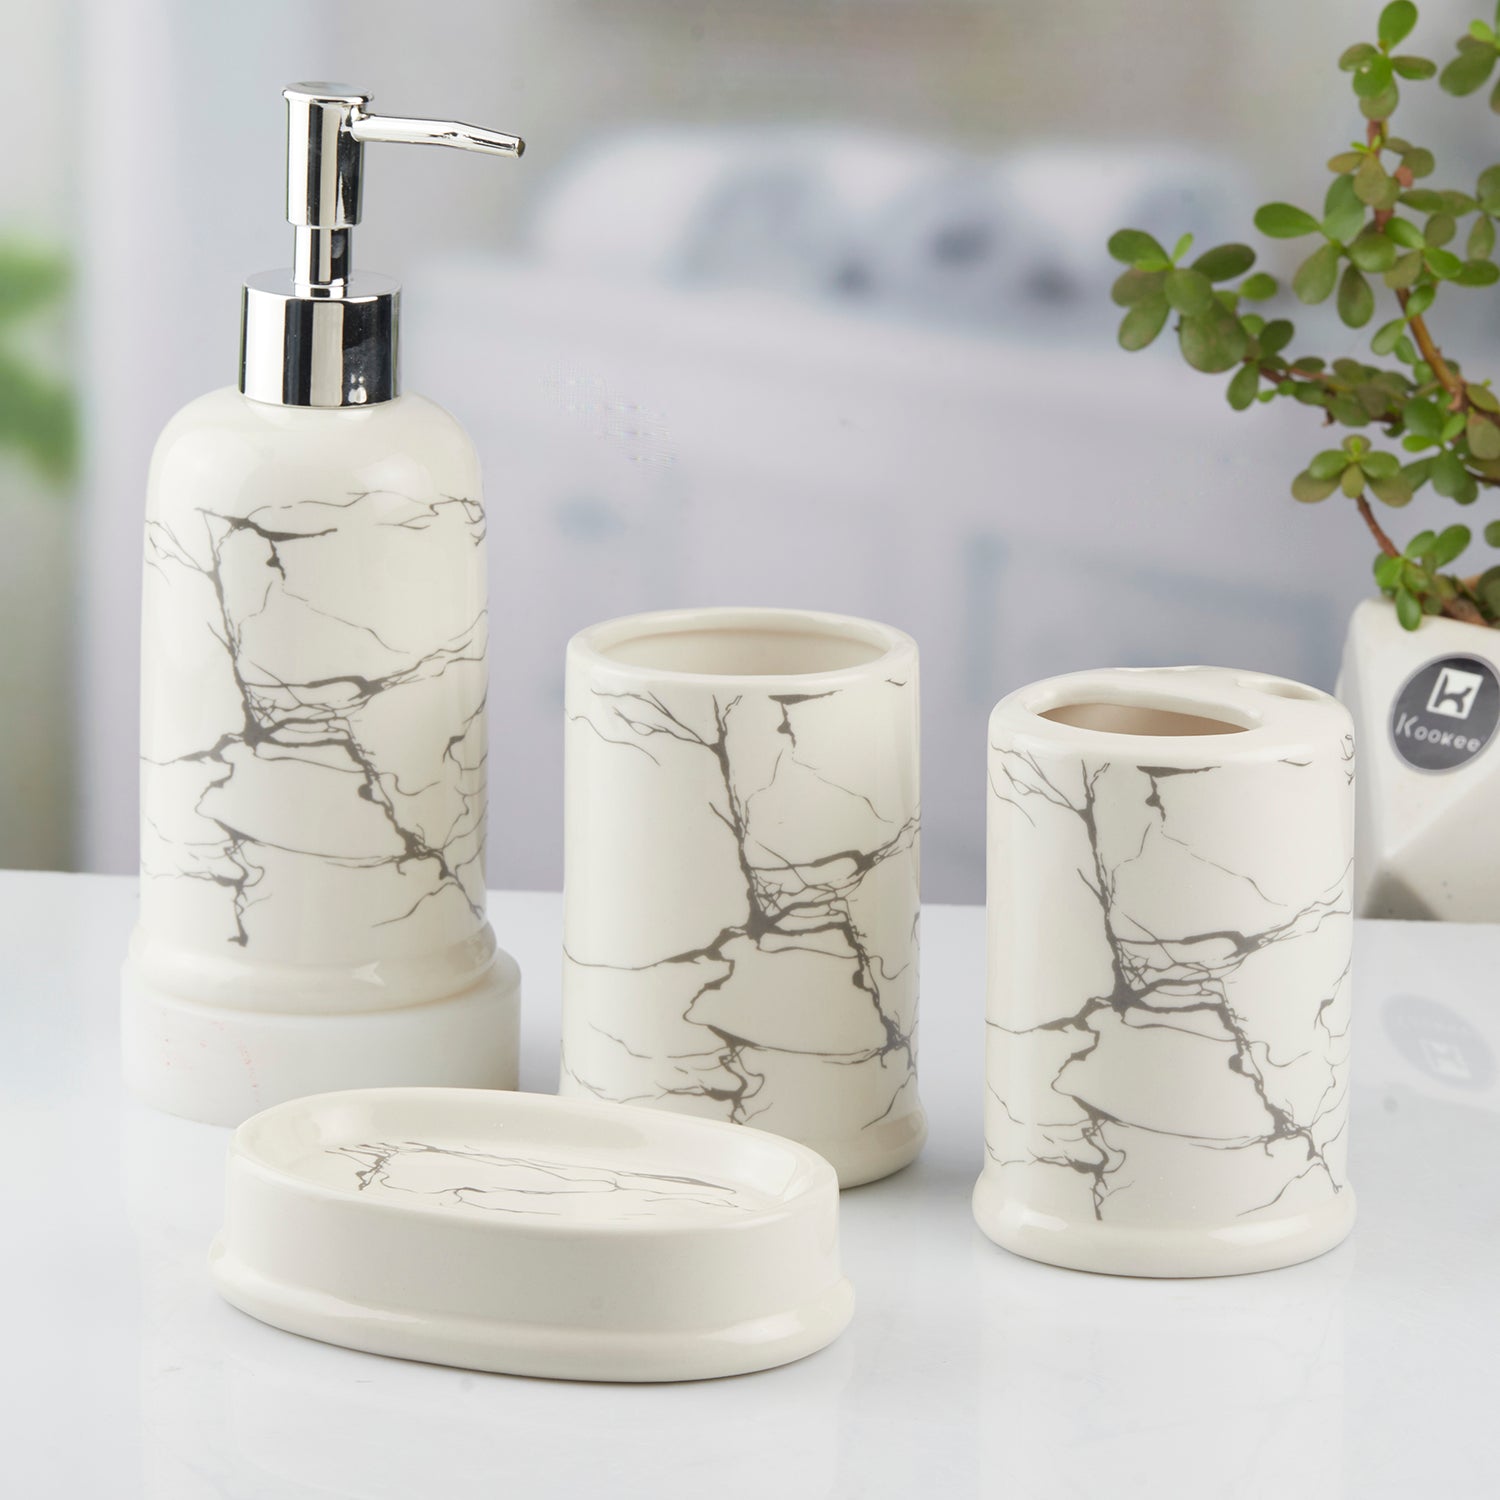 Ceramic Bathroom Set of 4 with Soap Dispenser (10392)